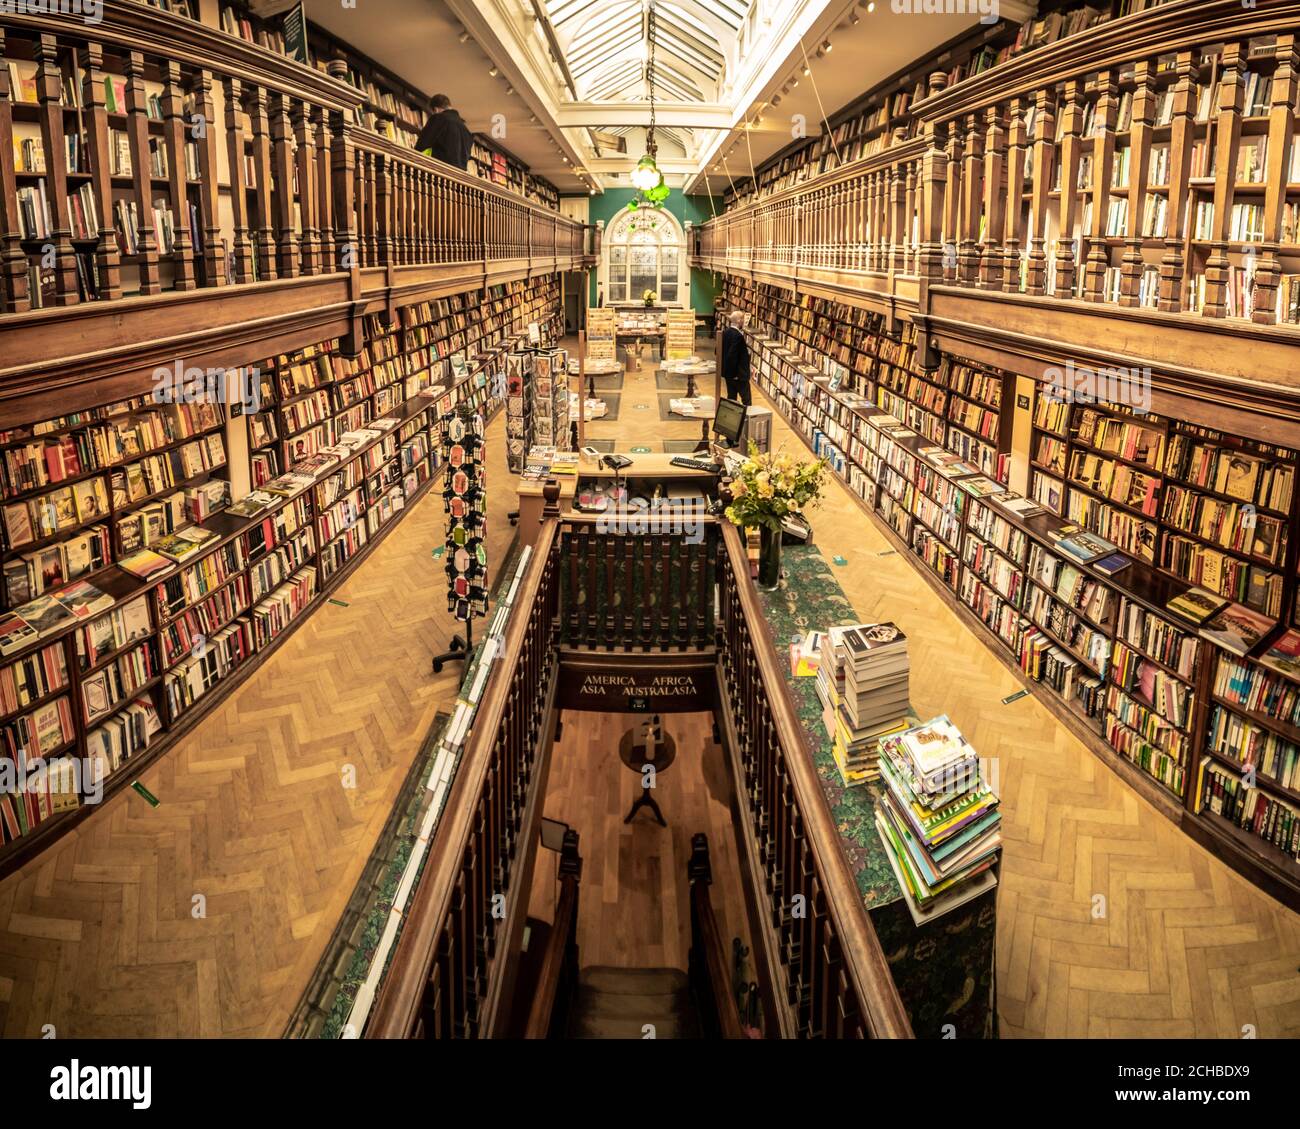 London- September 2020: Interior of Daulnt Book store on Marylebone High street. Stock Photo